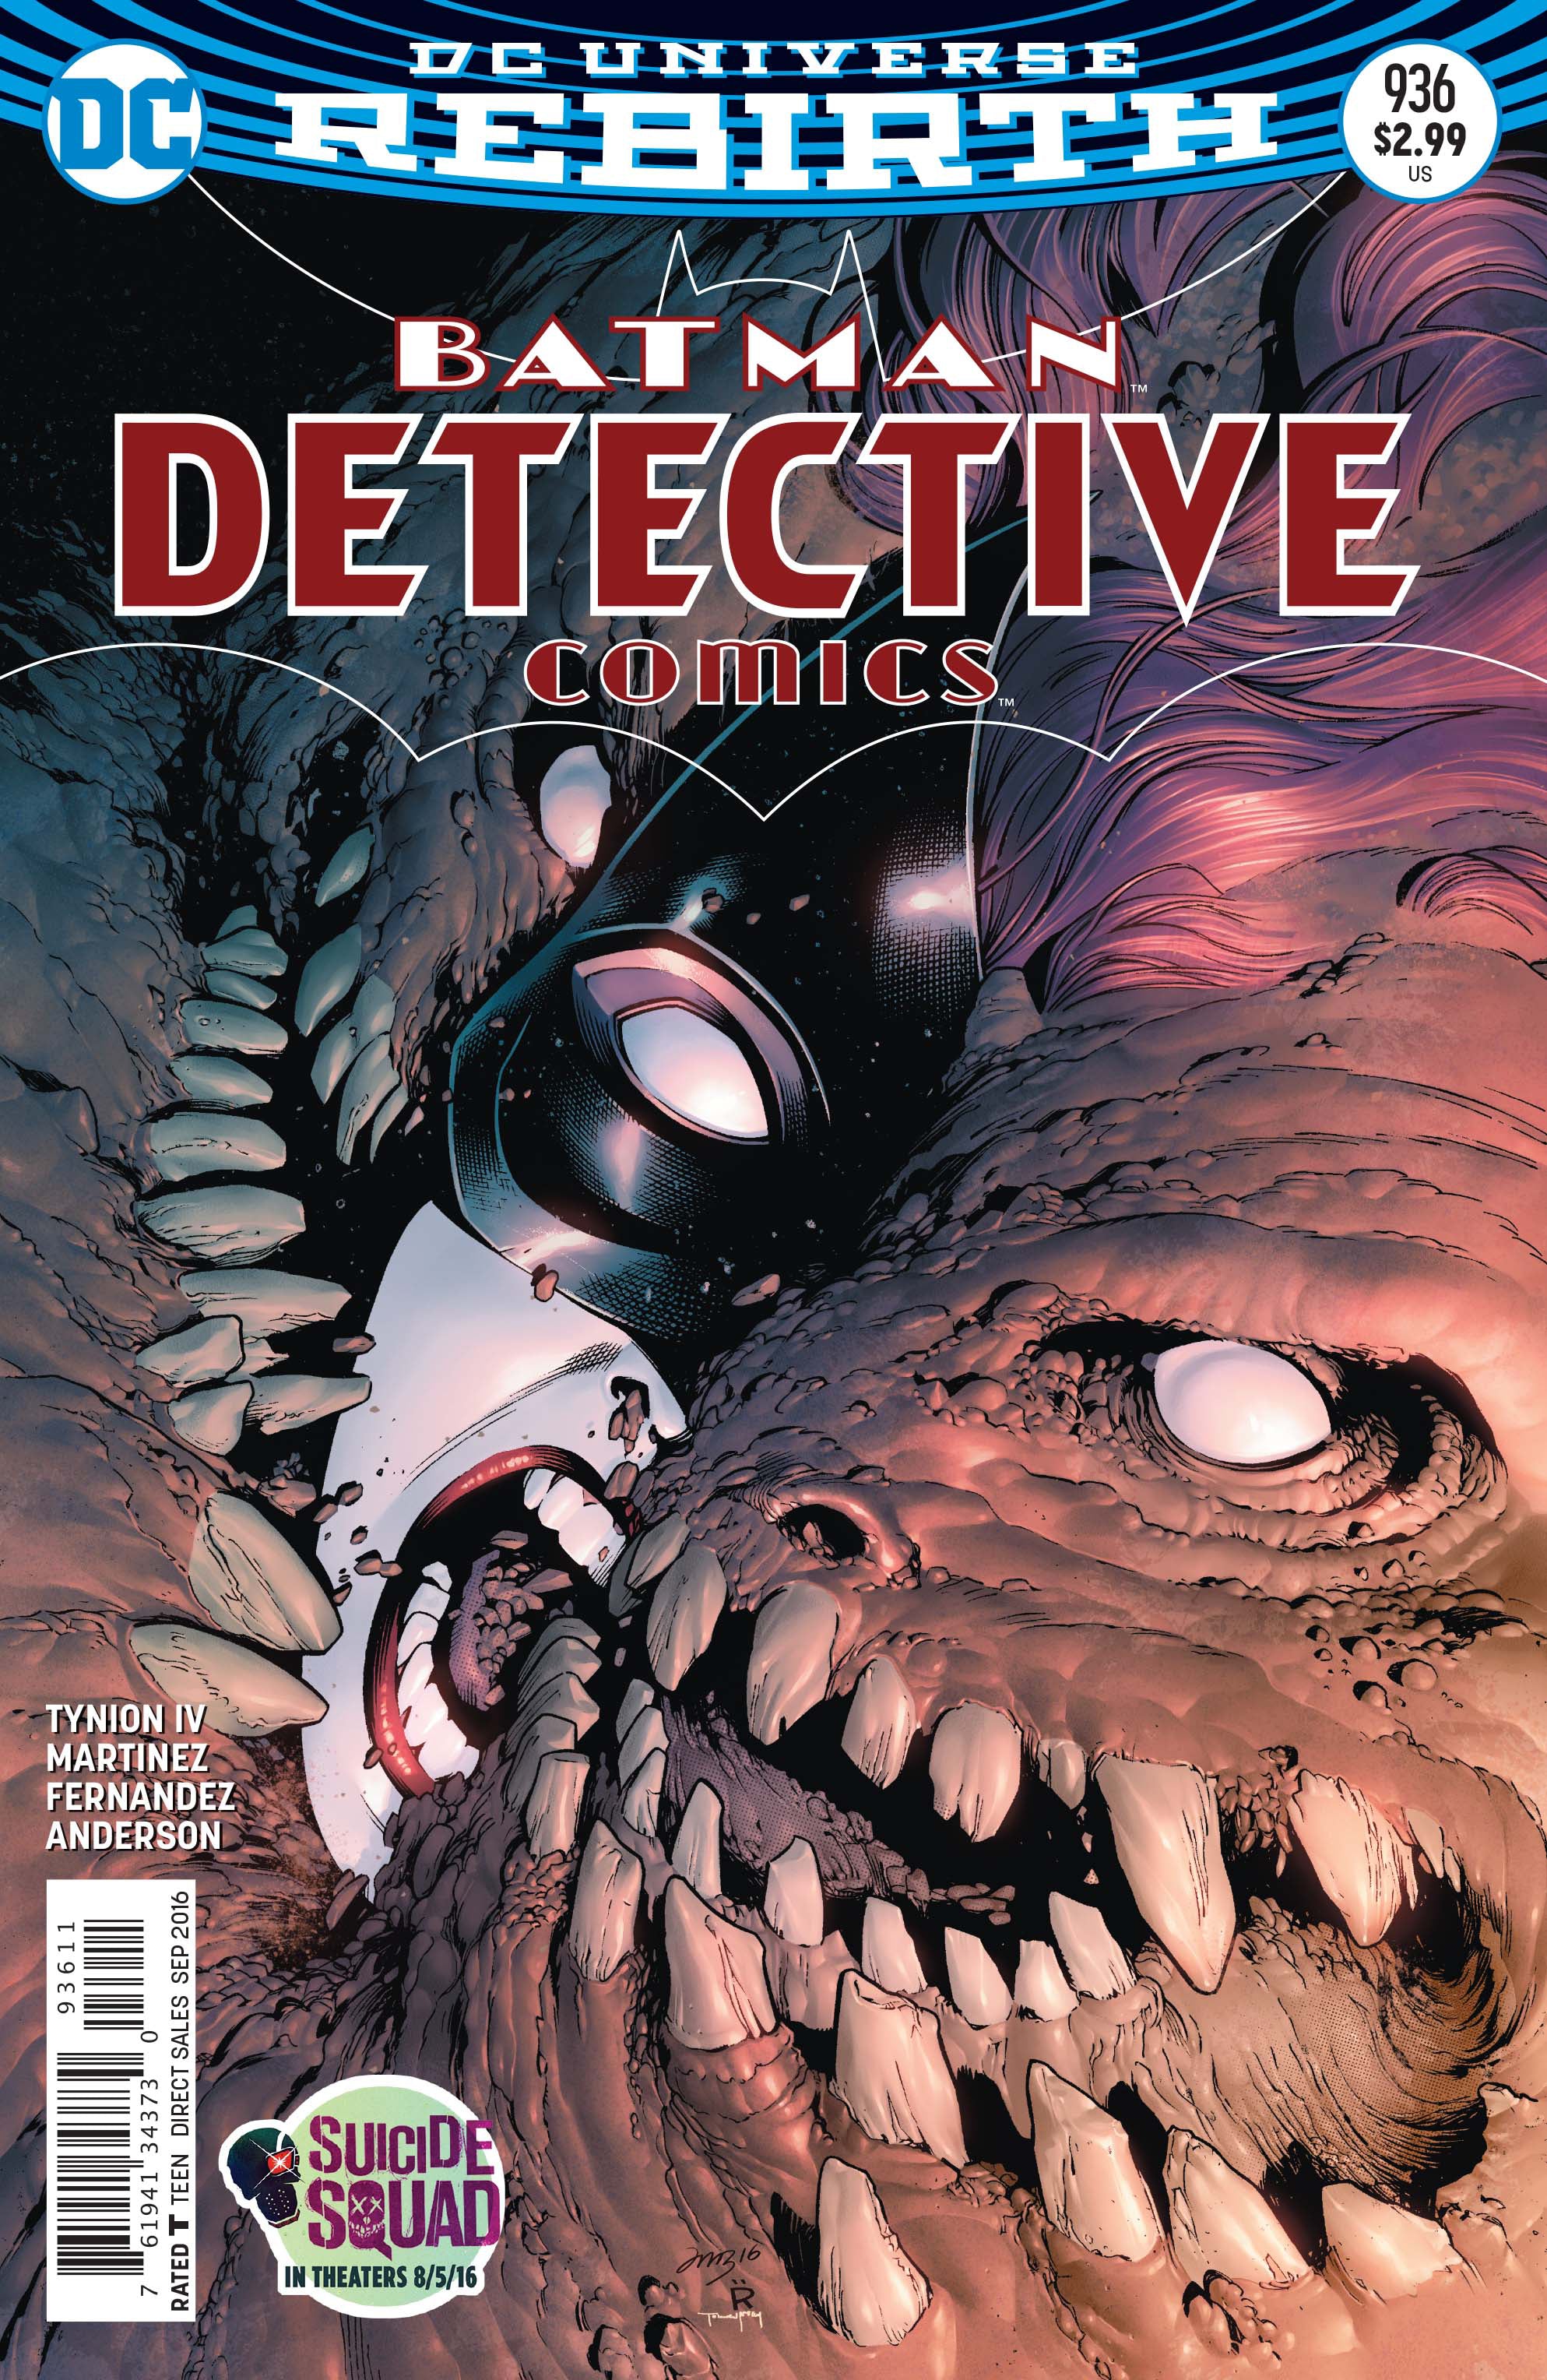 DETECTIVE COMICS #936 | Game Master's Emporium (The New GME)